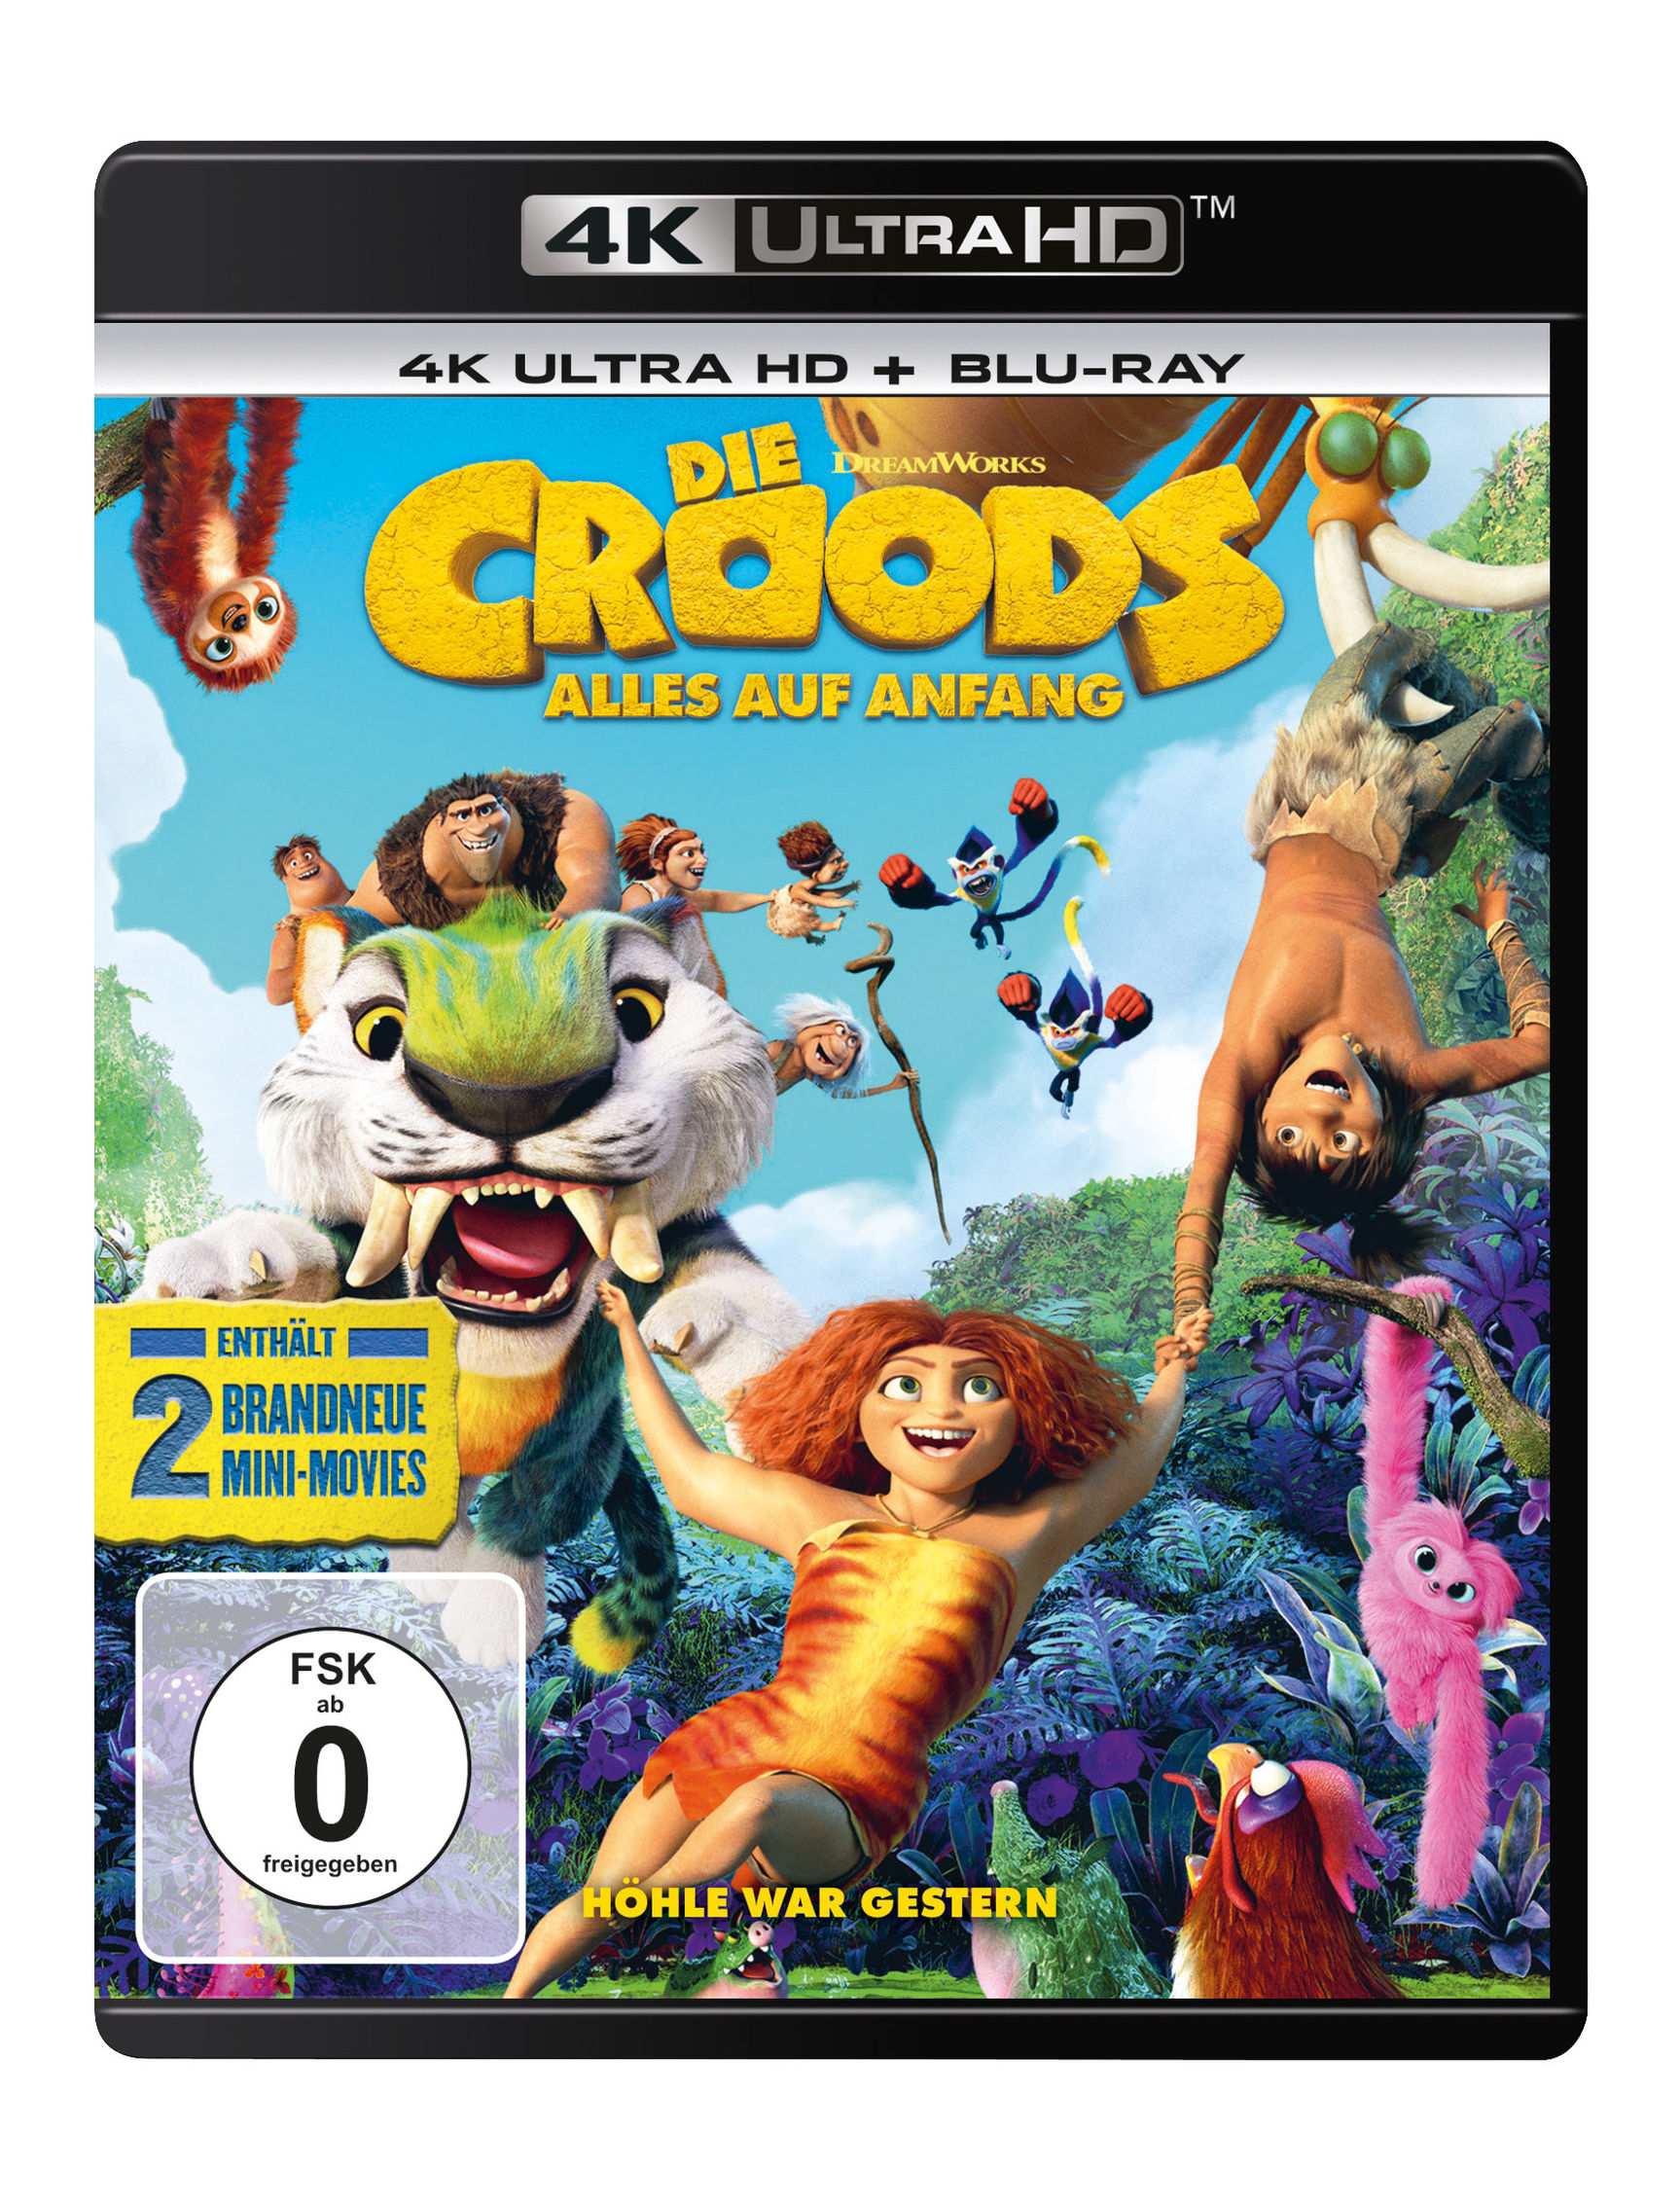 Die Croods - Alles auf Anfang 4K Ultra HD Blu-ray | Weltbild.de